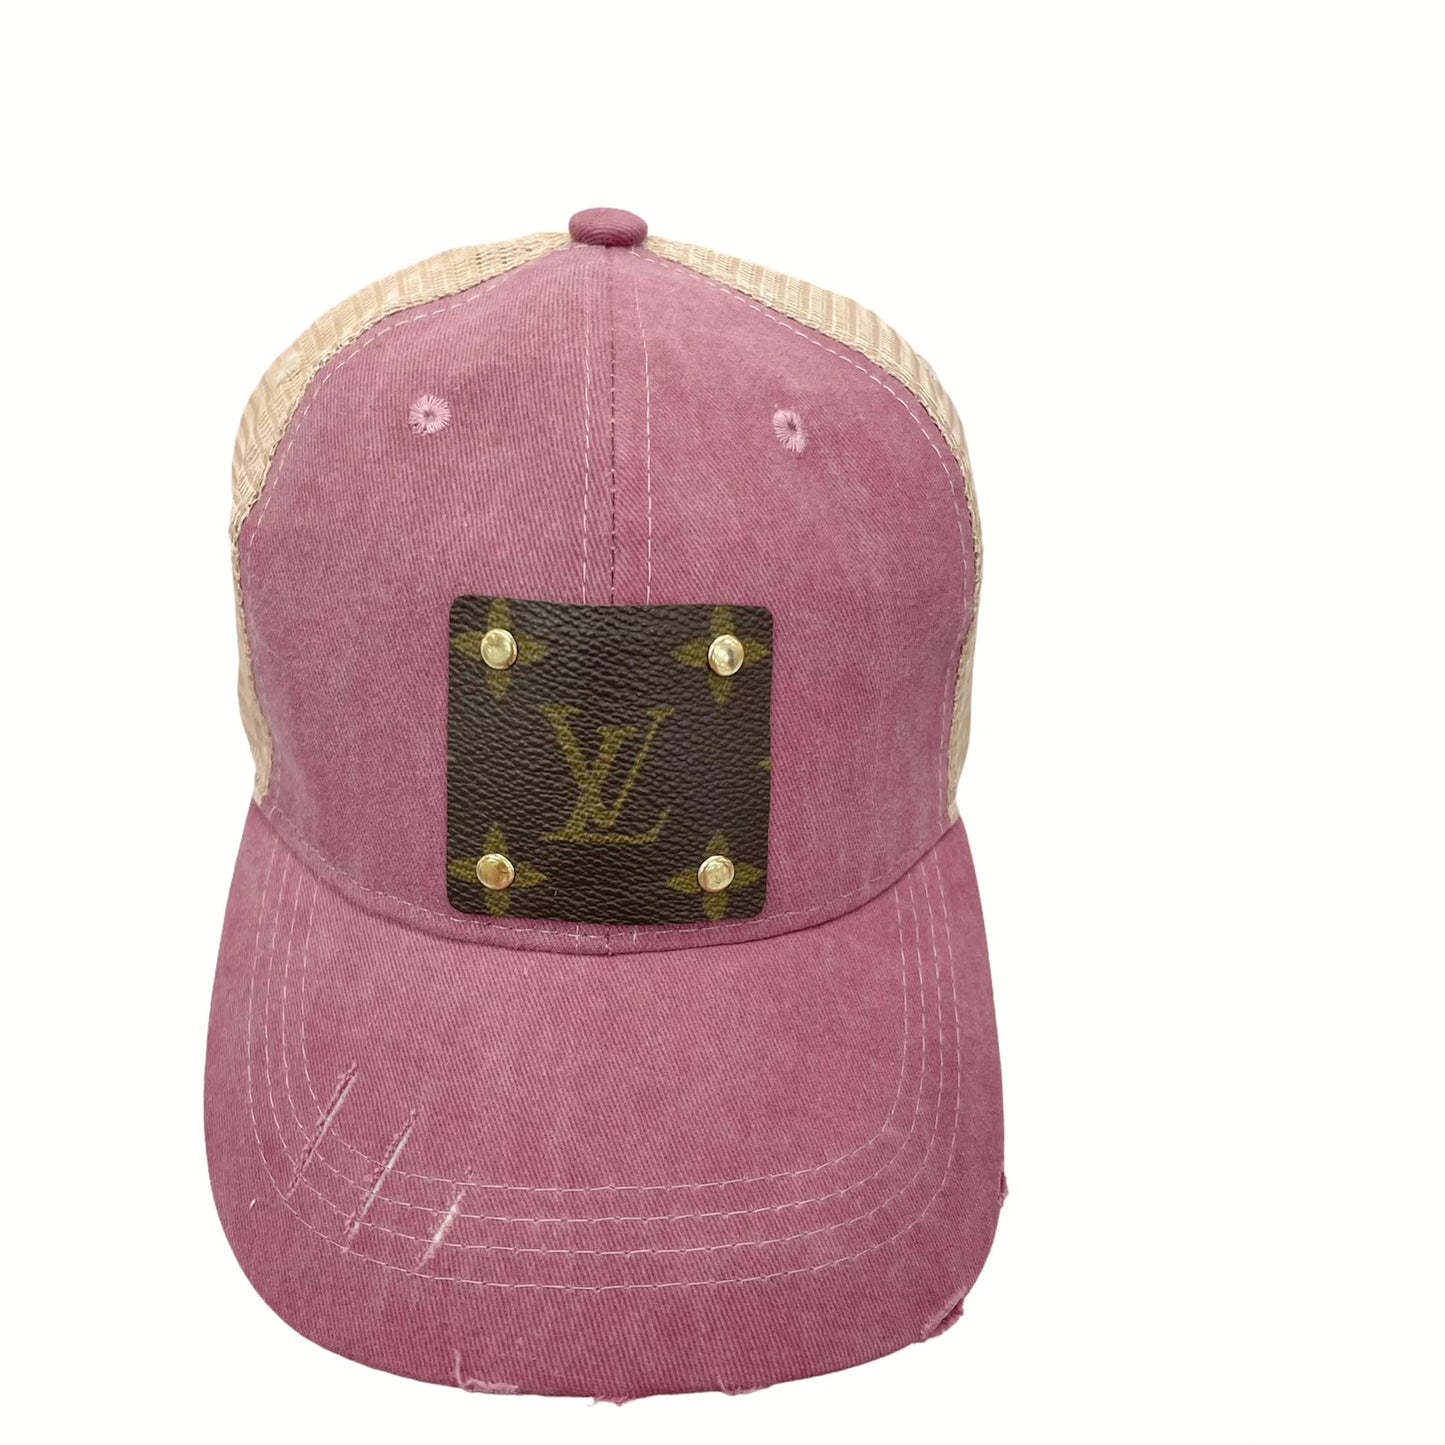 Authentic Repurposed Baseball Hat